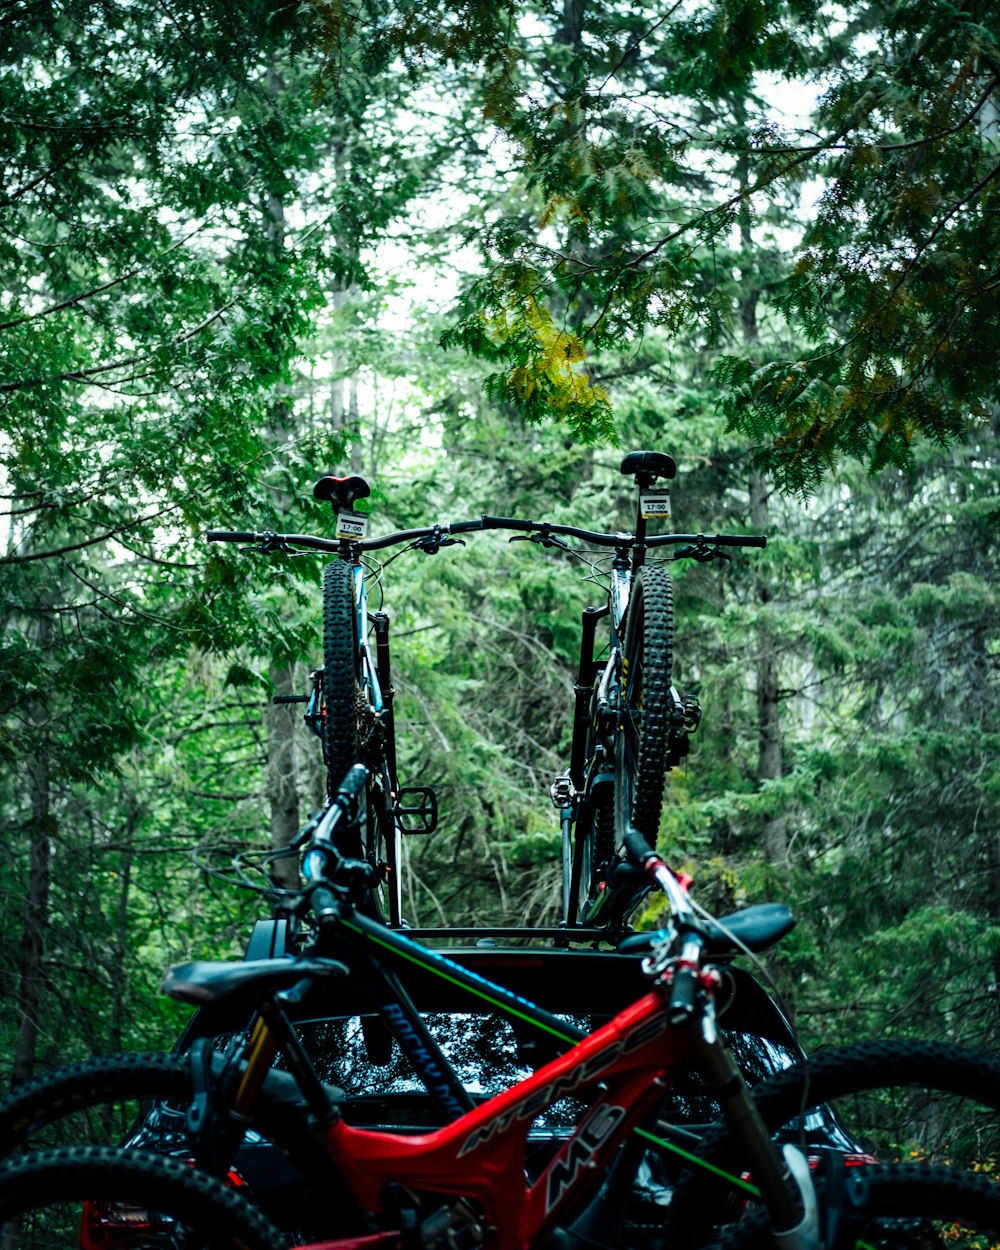 pike of bikes near trees